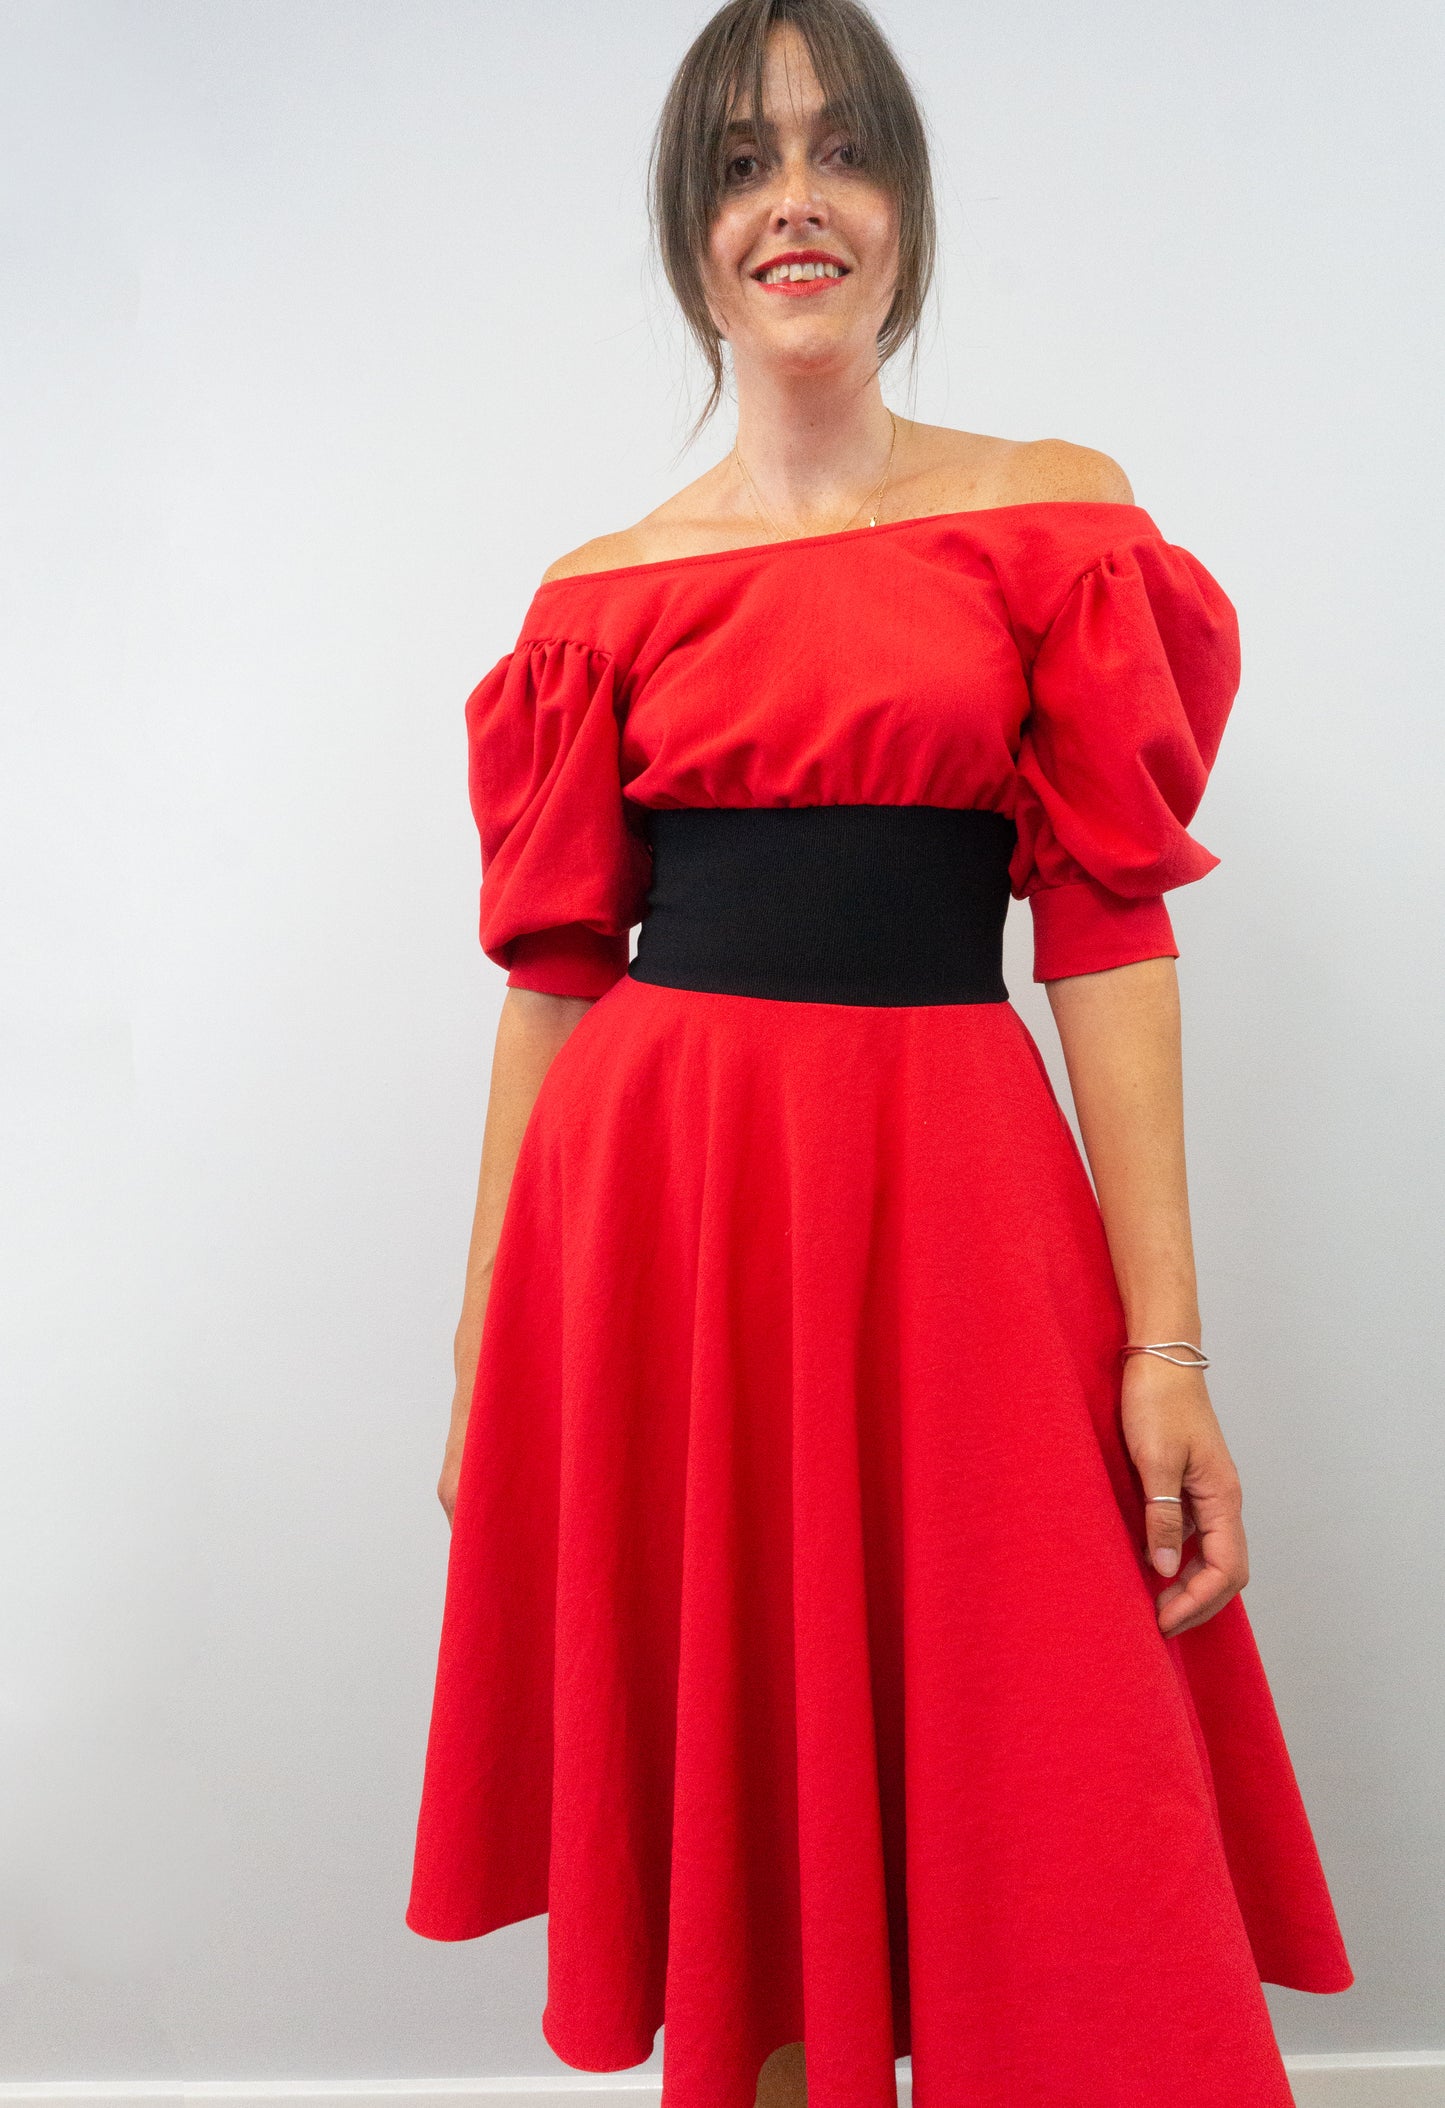 Vintage Red and black full skirt zandra rhodes saks 5th avenue dress